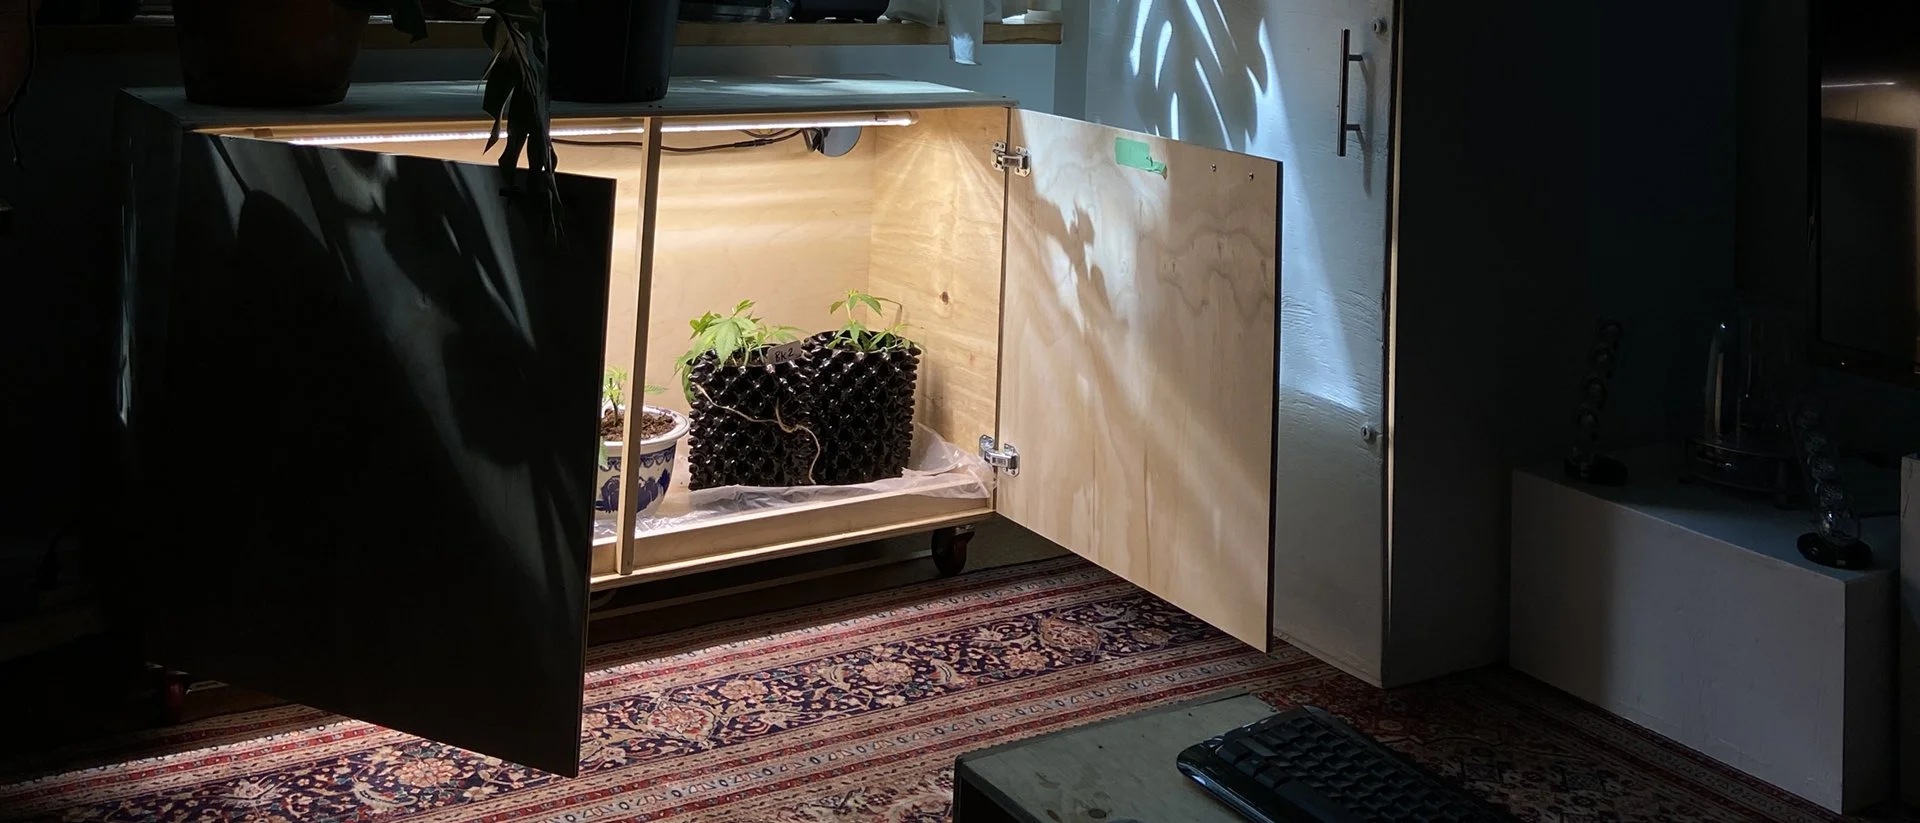 Cabinet-like Hidden Grow Box